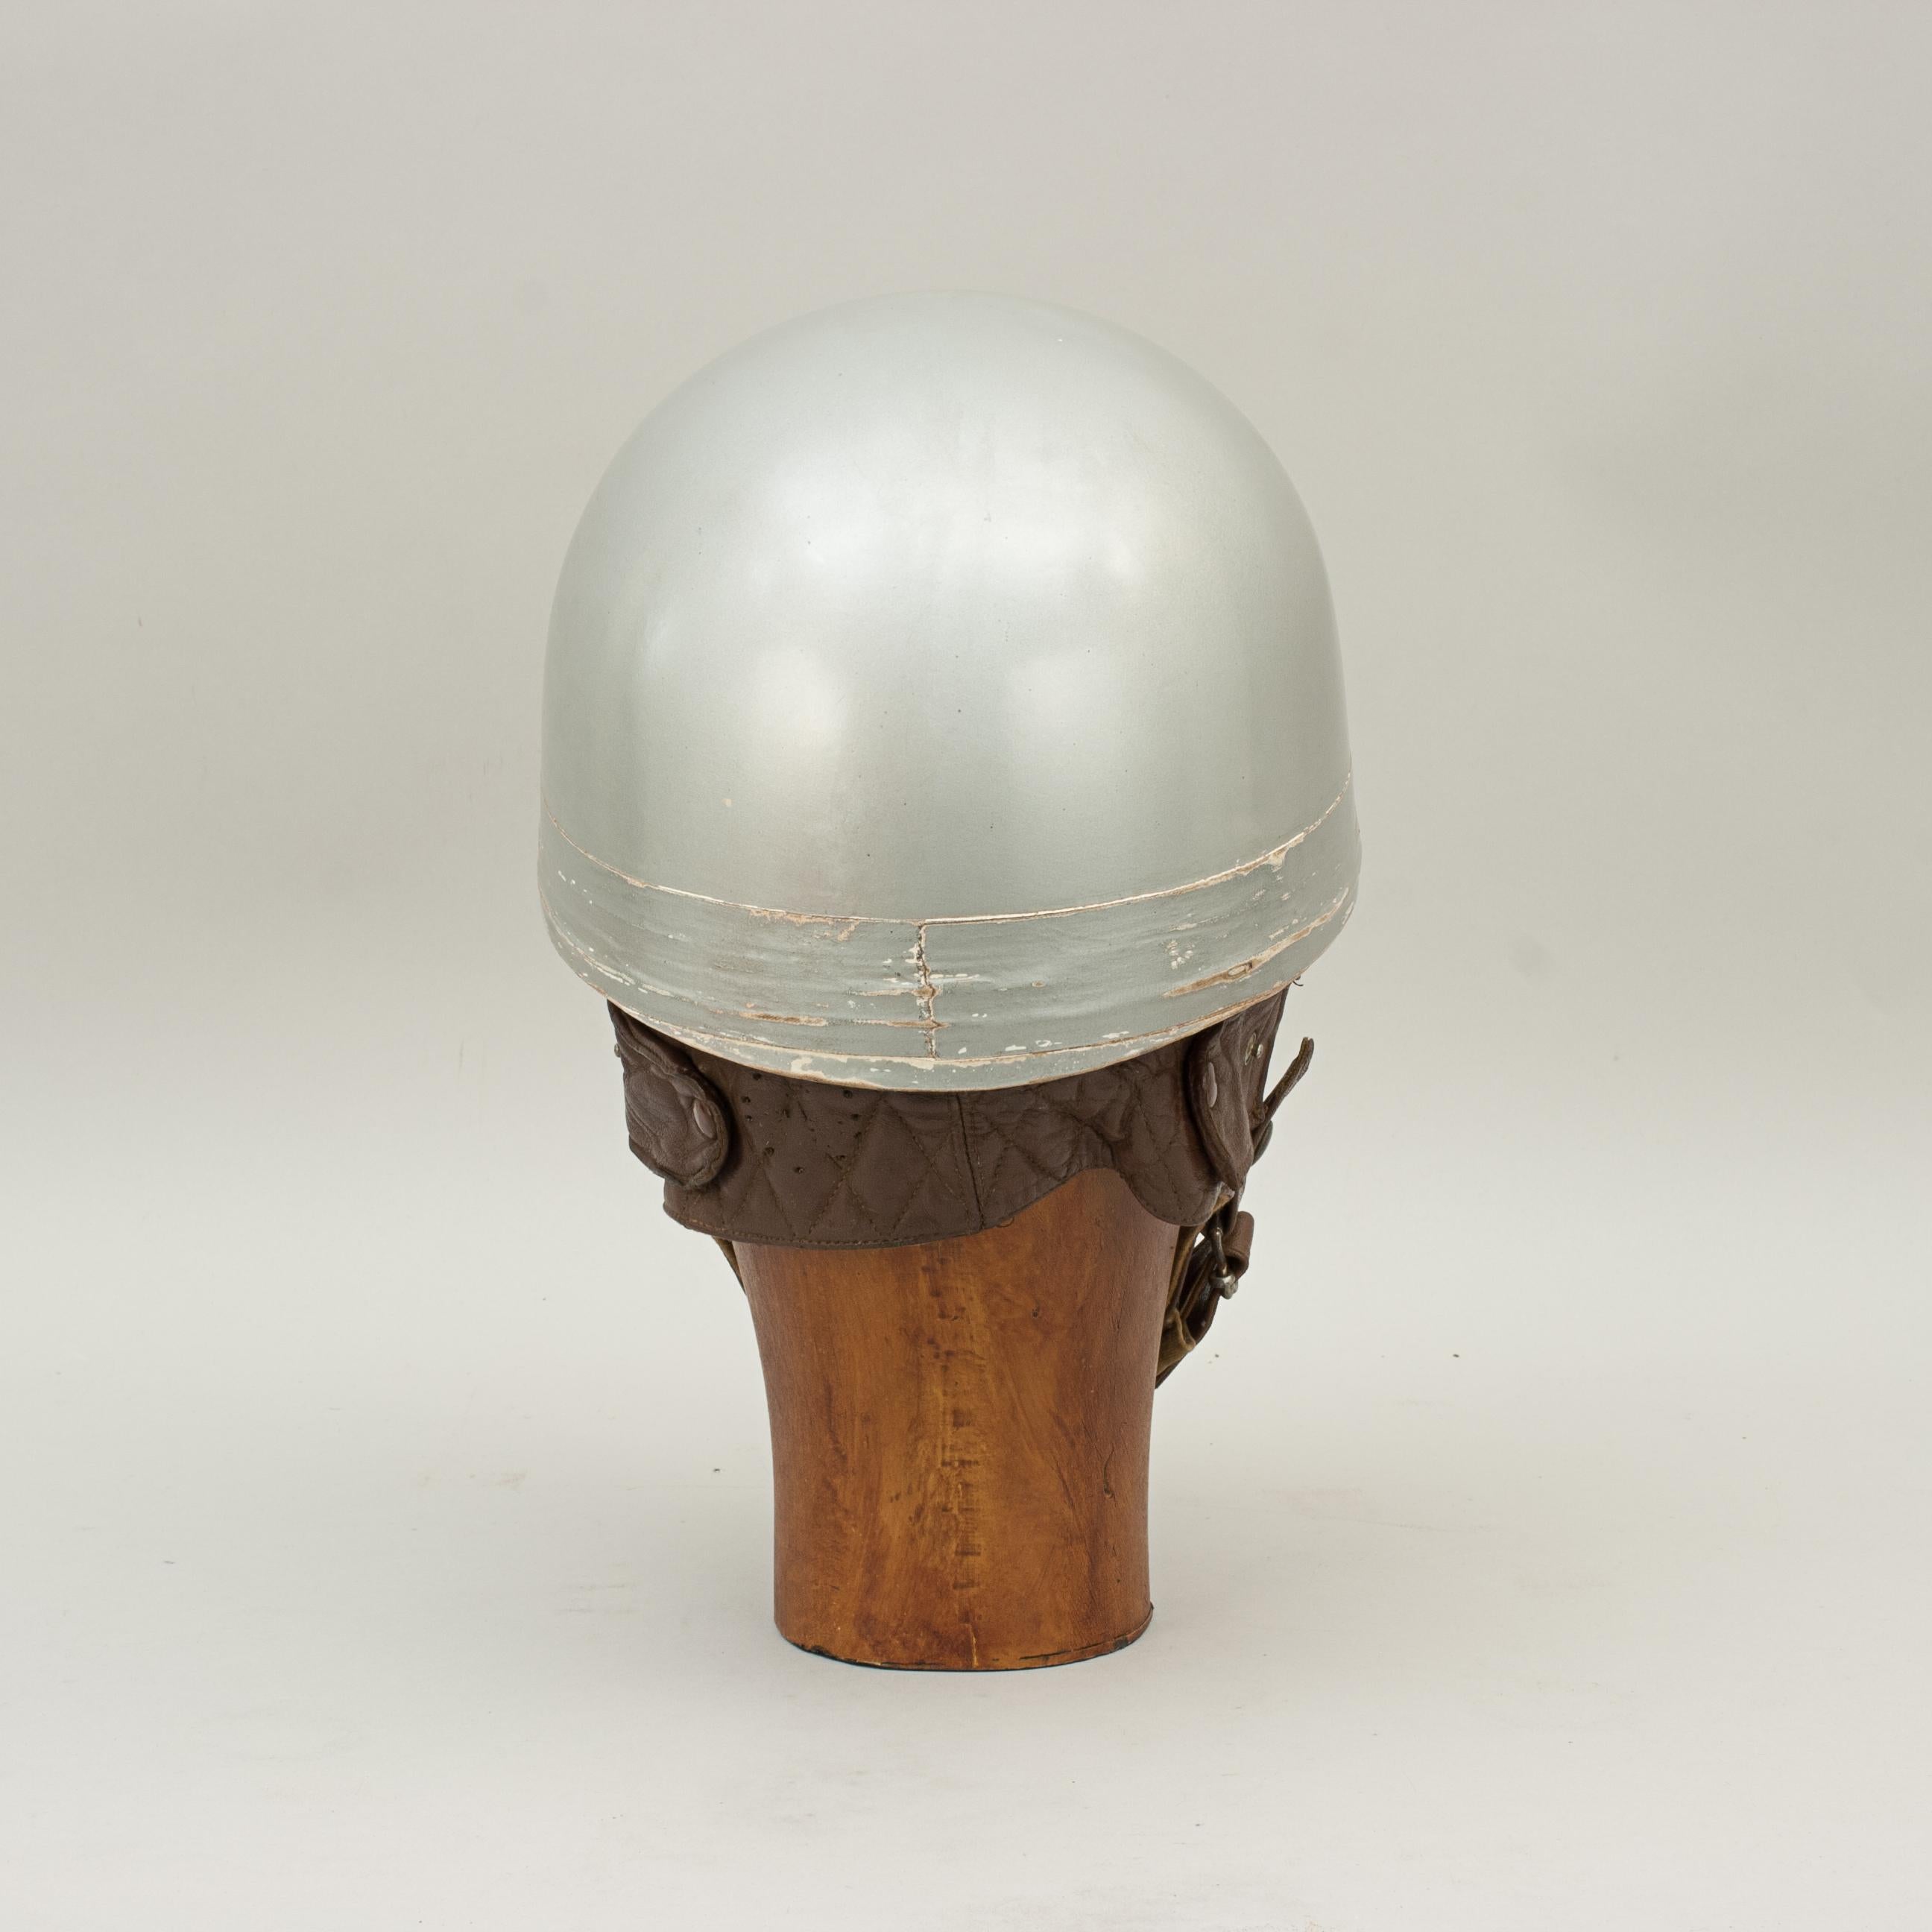 pudding bowl helmet